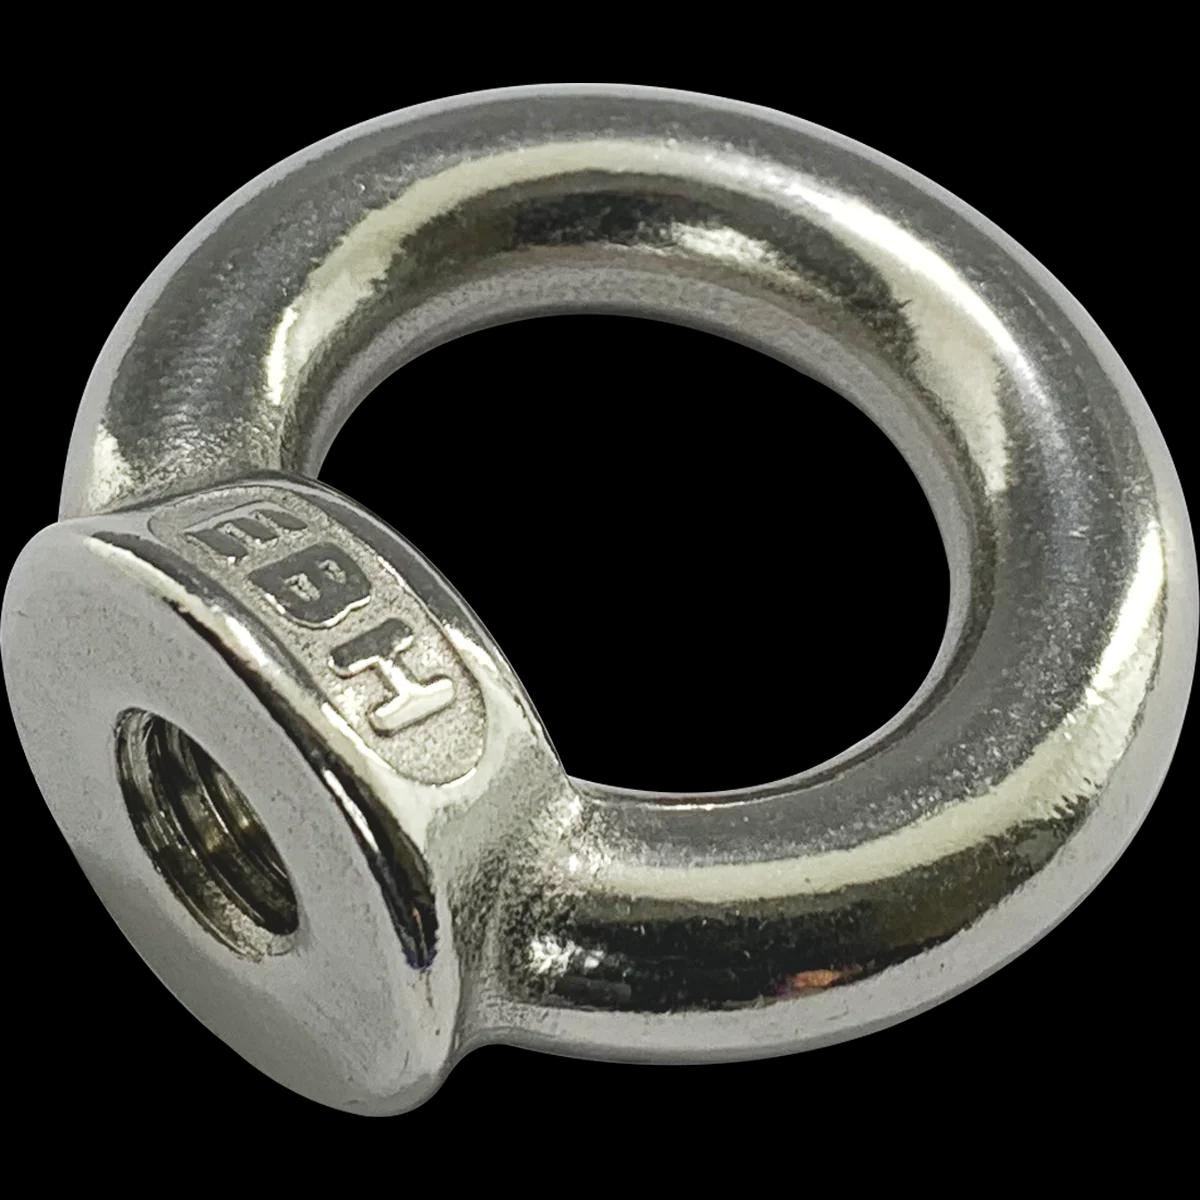 images-eye-nut-bolts-for-lifting-stainless-steel-fasteners-eye-bolts-welded-cyprus-volos-thessaloniki-synodinos-mapa-thyliki-naytiliaka-eidi-Metric-A4-Stainless-Steel-Lifting-Eye-Bolts